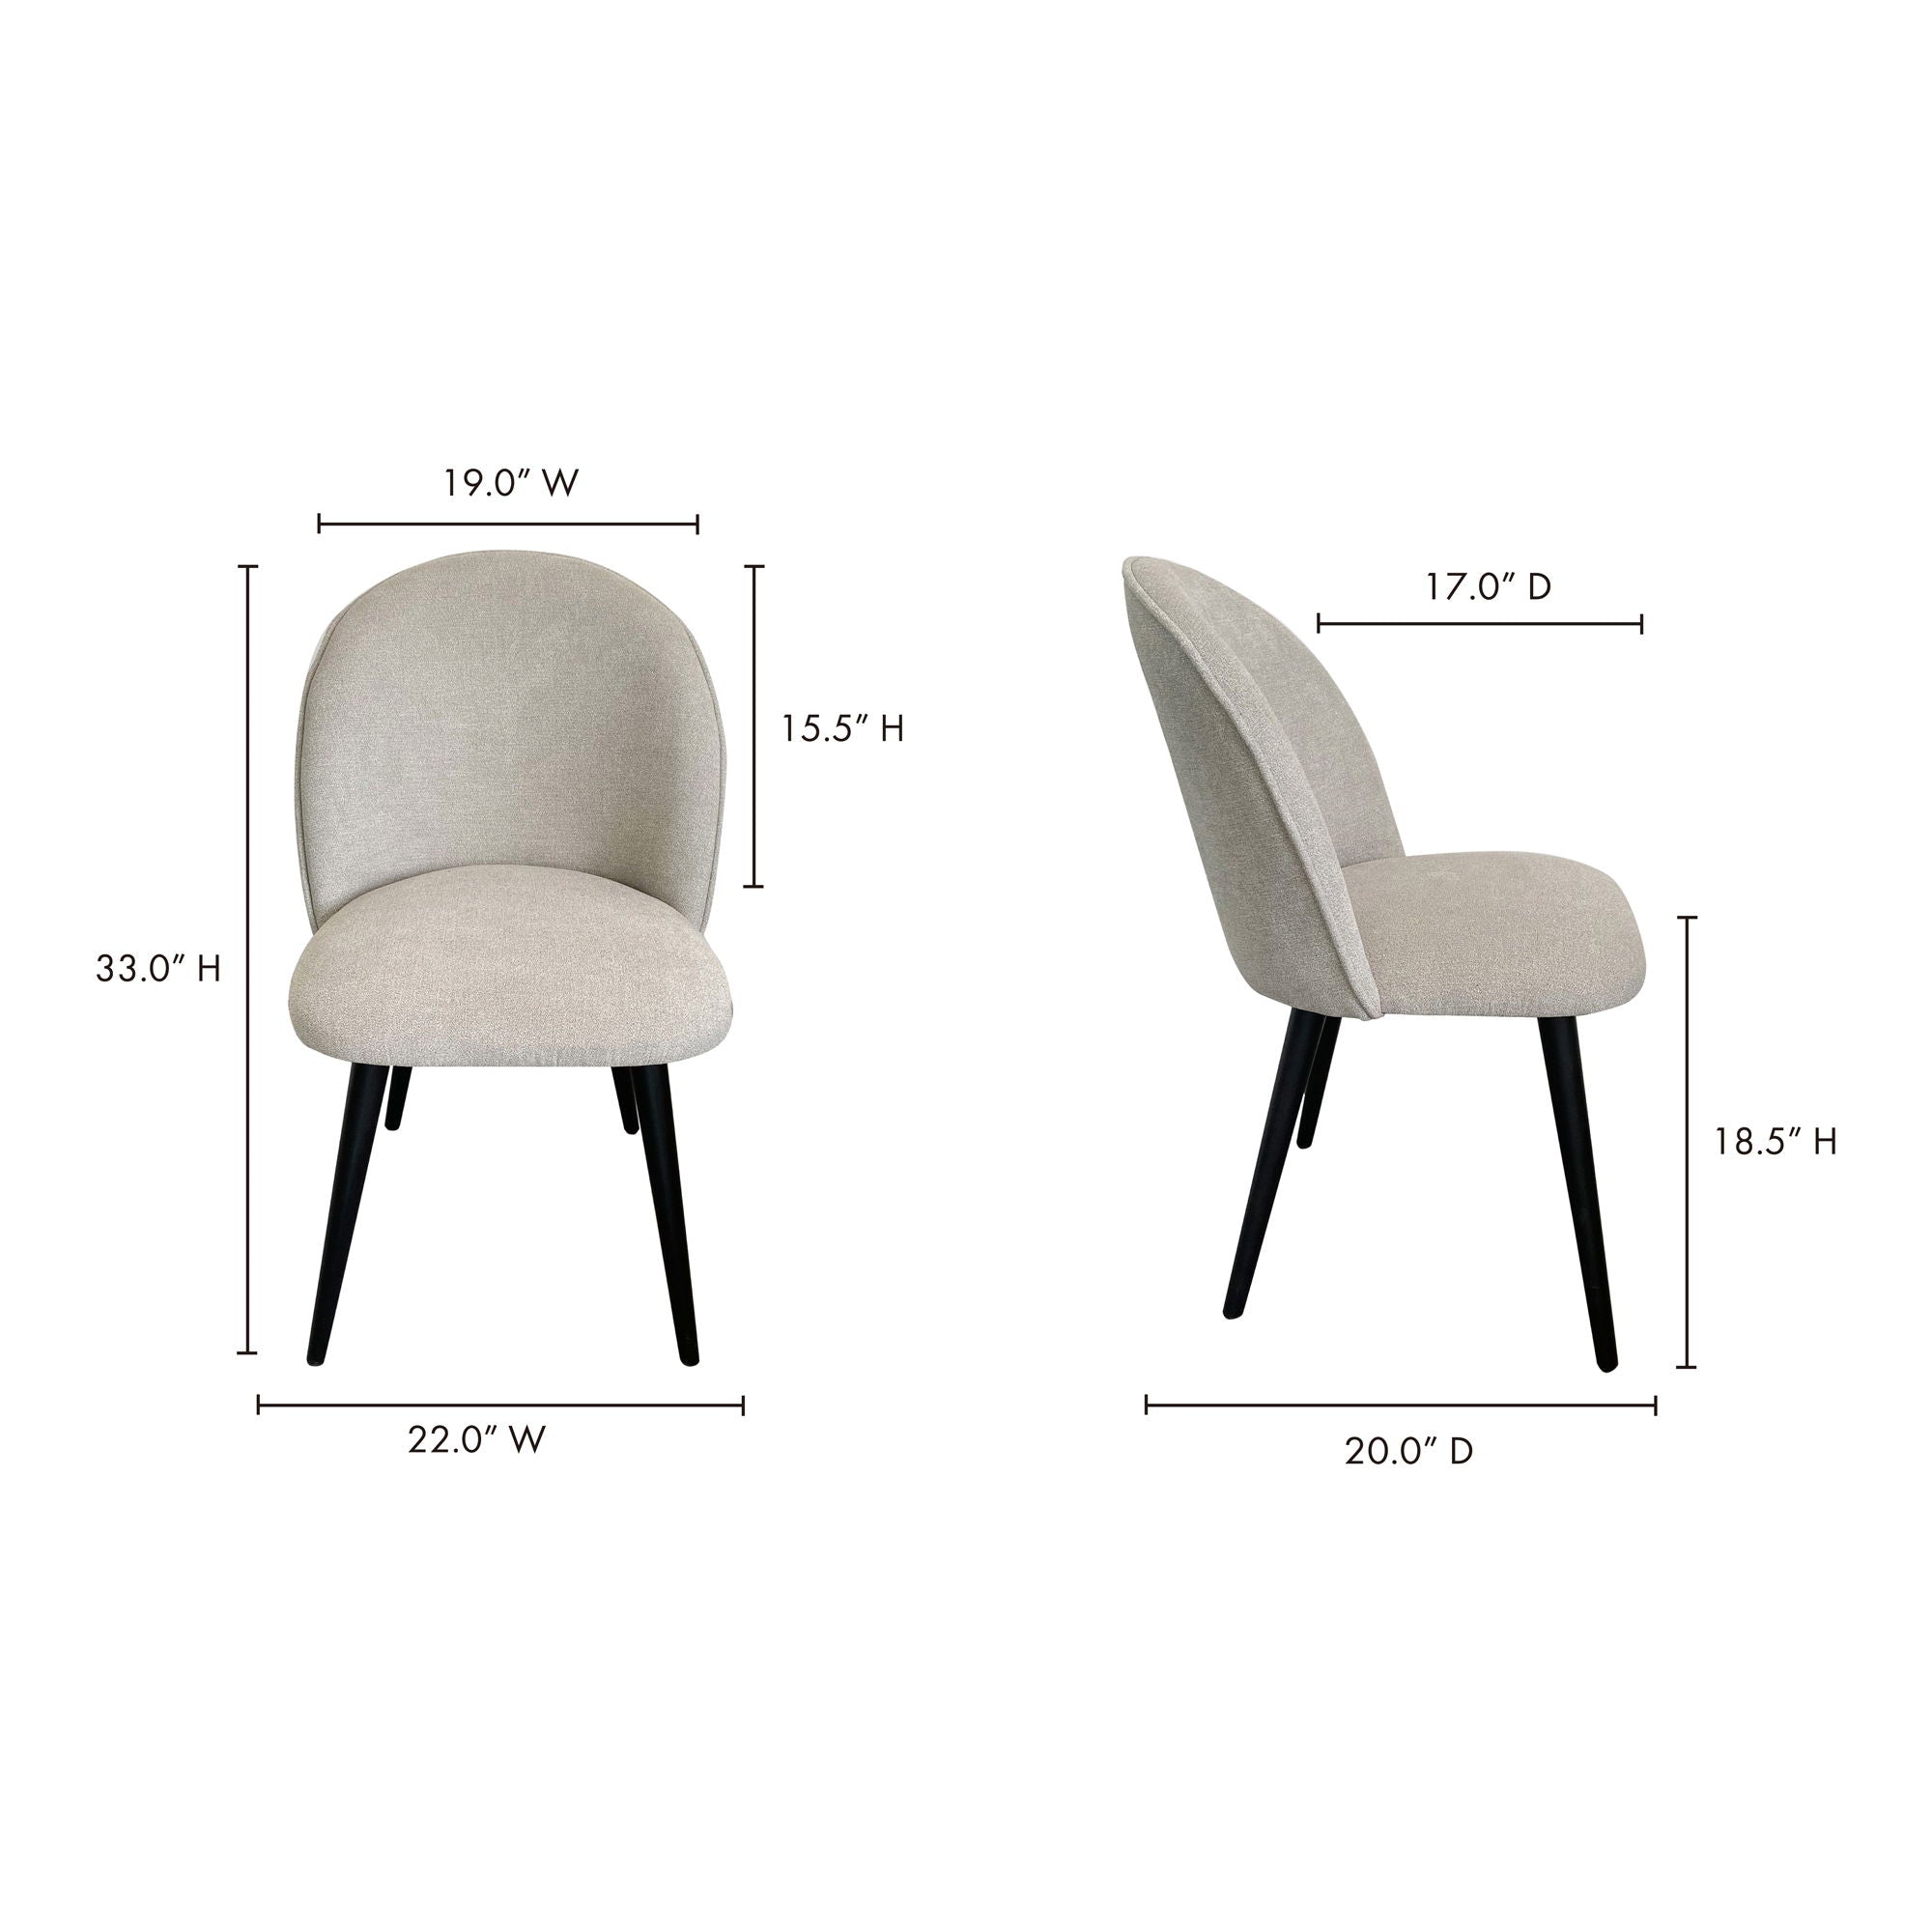 Clarissa - Dining Chair - Light Gray - M2